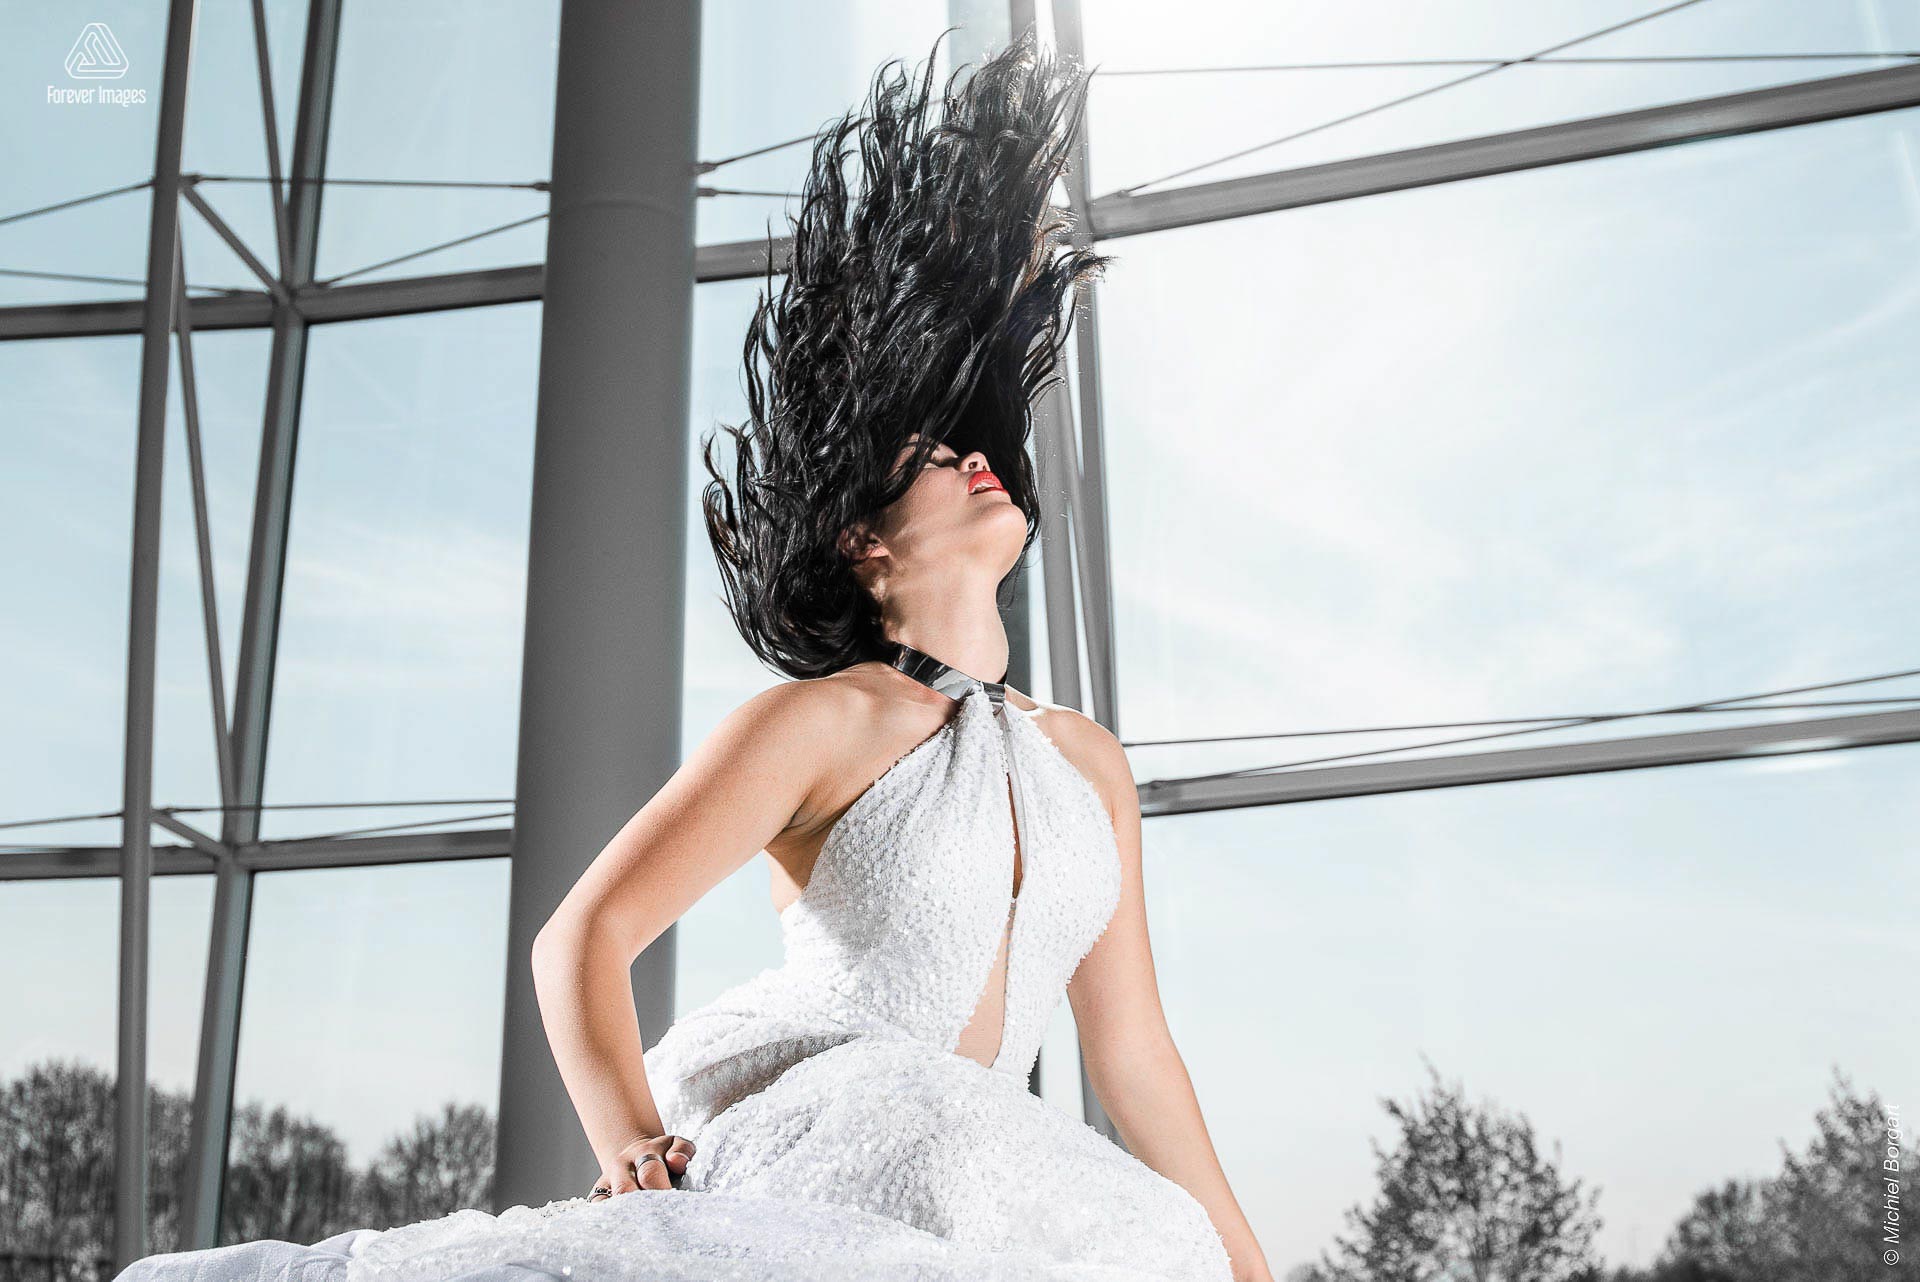 Fashionfoto portret glamour dame witte jurk metale choker hair flip | Daphna Akkermans David Cardenas | Fashionfotograaf Michiel Borgart - Forever Images.